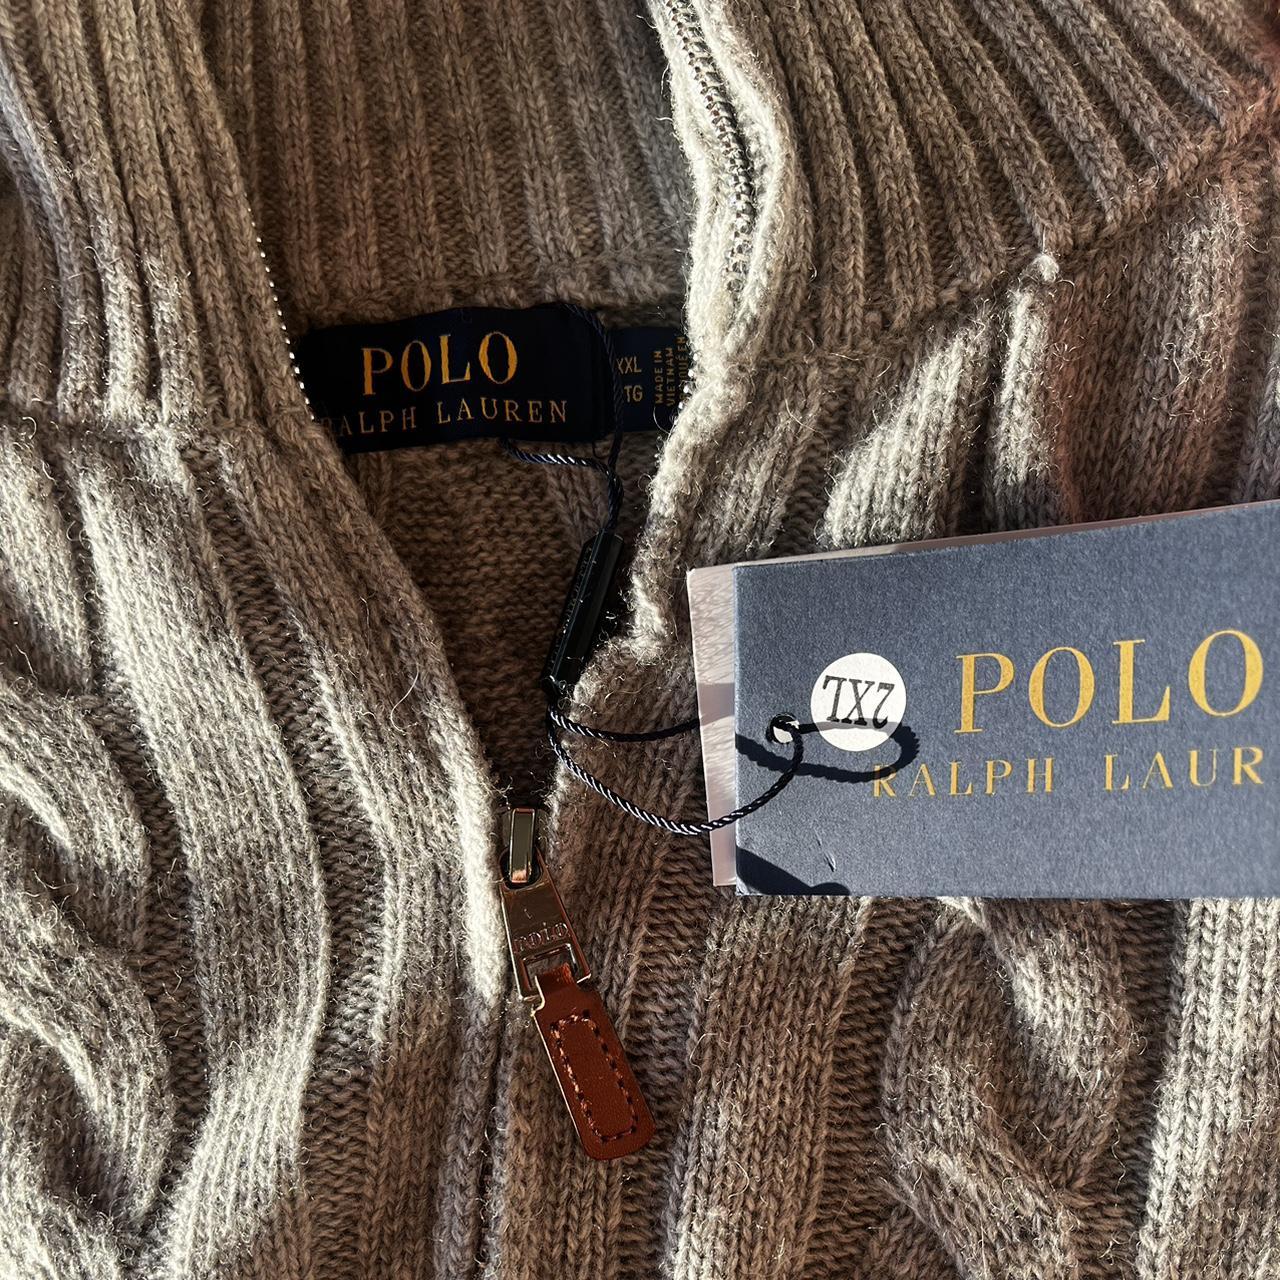 Polo Ralph Lauren Men’s sweater long sleeve... - Depop